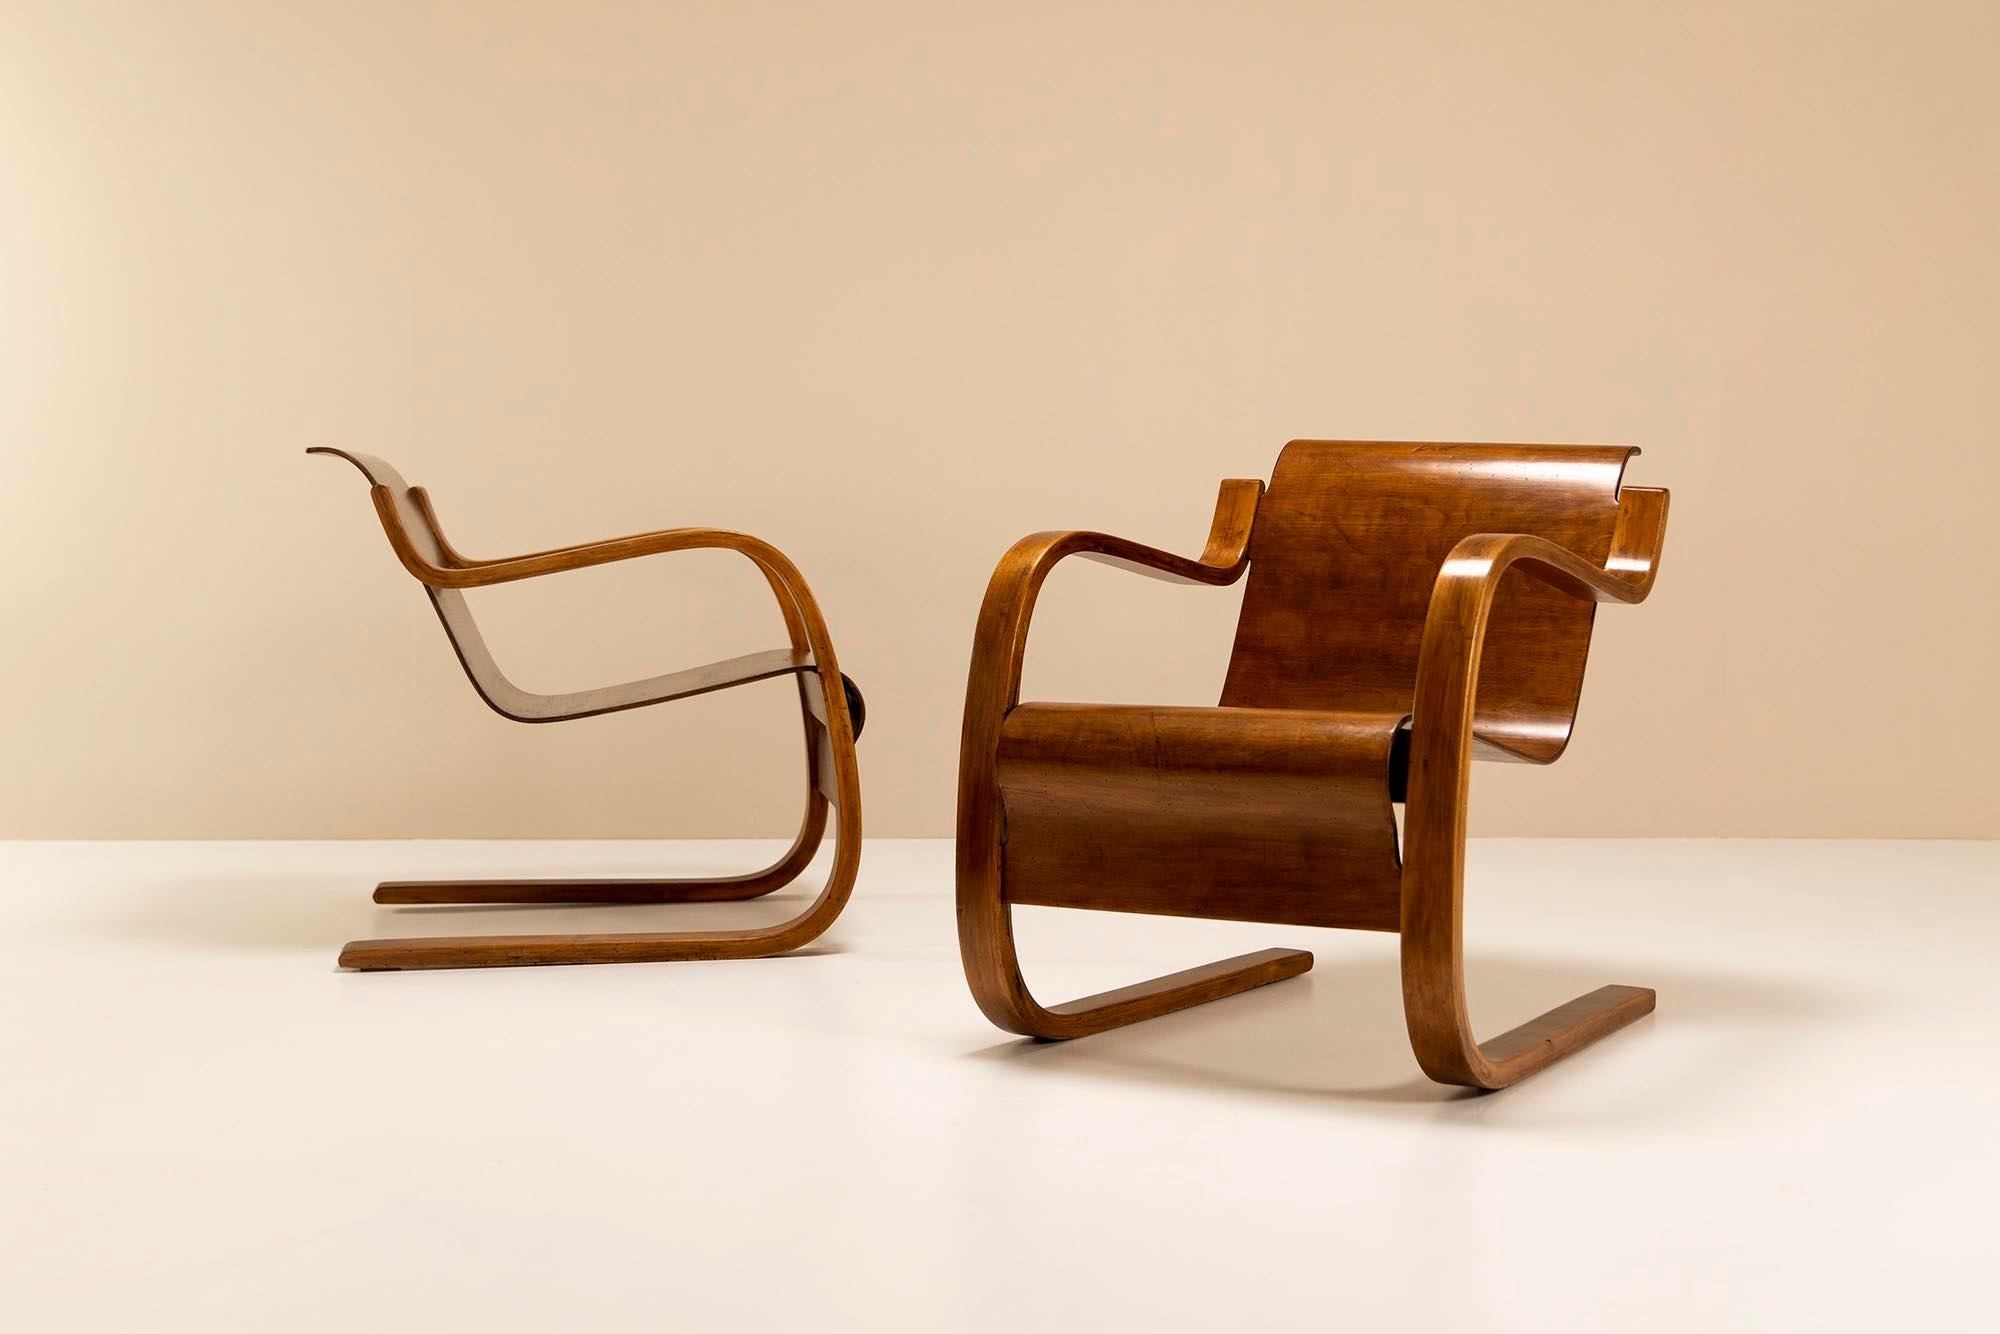 Mid-20th Century Alvar Aalto Lounge Chair in Birch Plywood Model 31/41, 1935 Finland